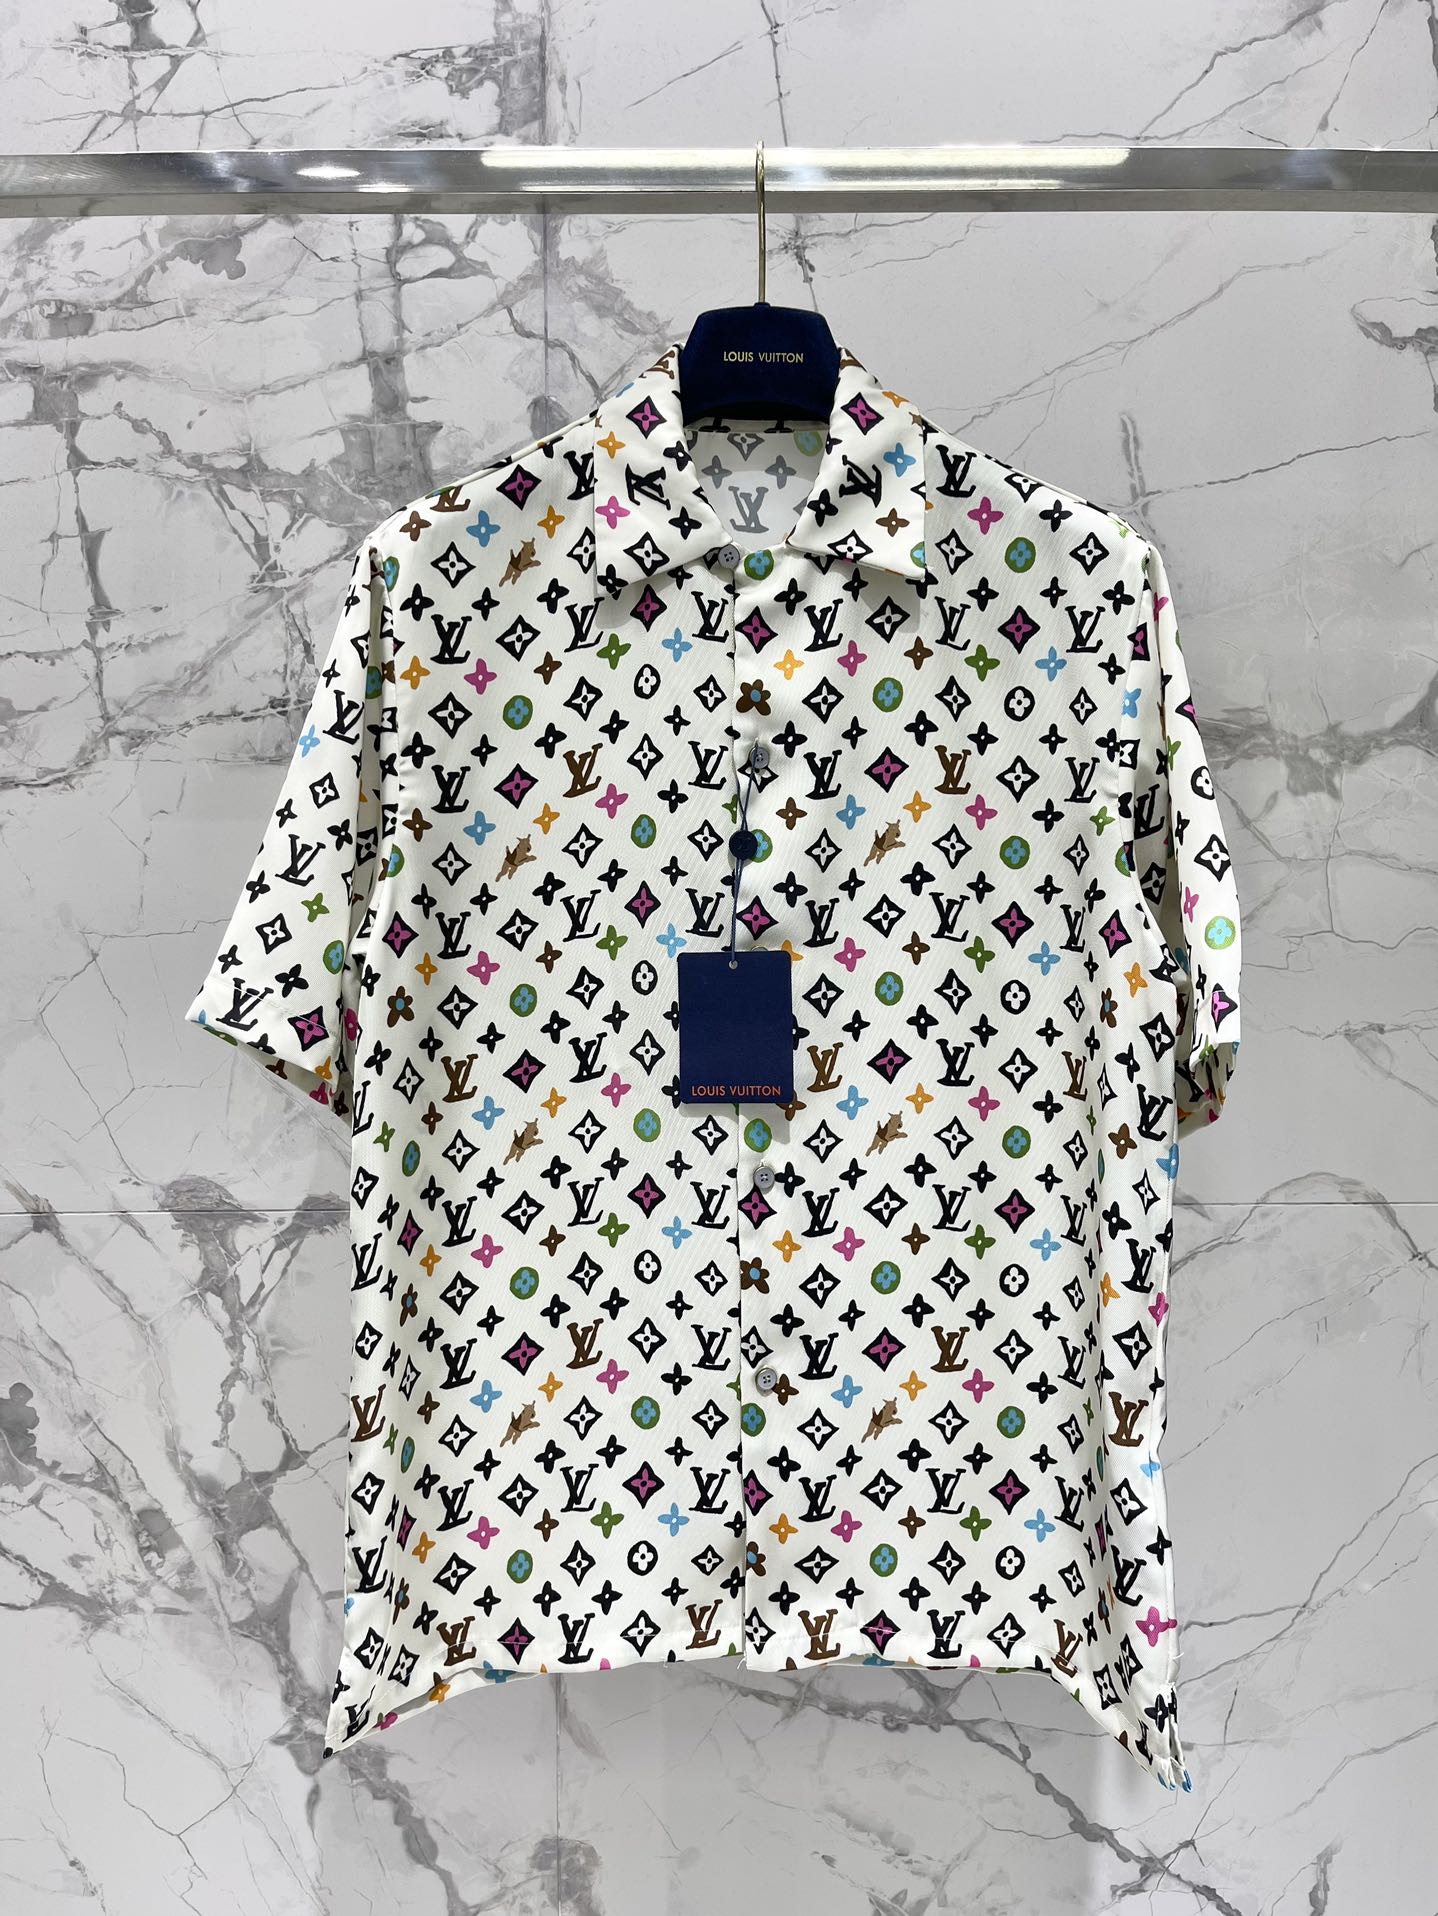 Louis Vuitton Kleding Overhemden Zomercollectie Fashion